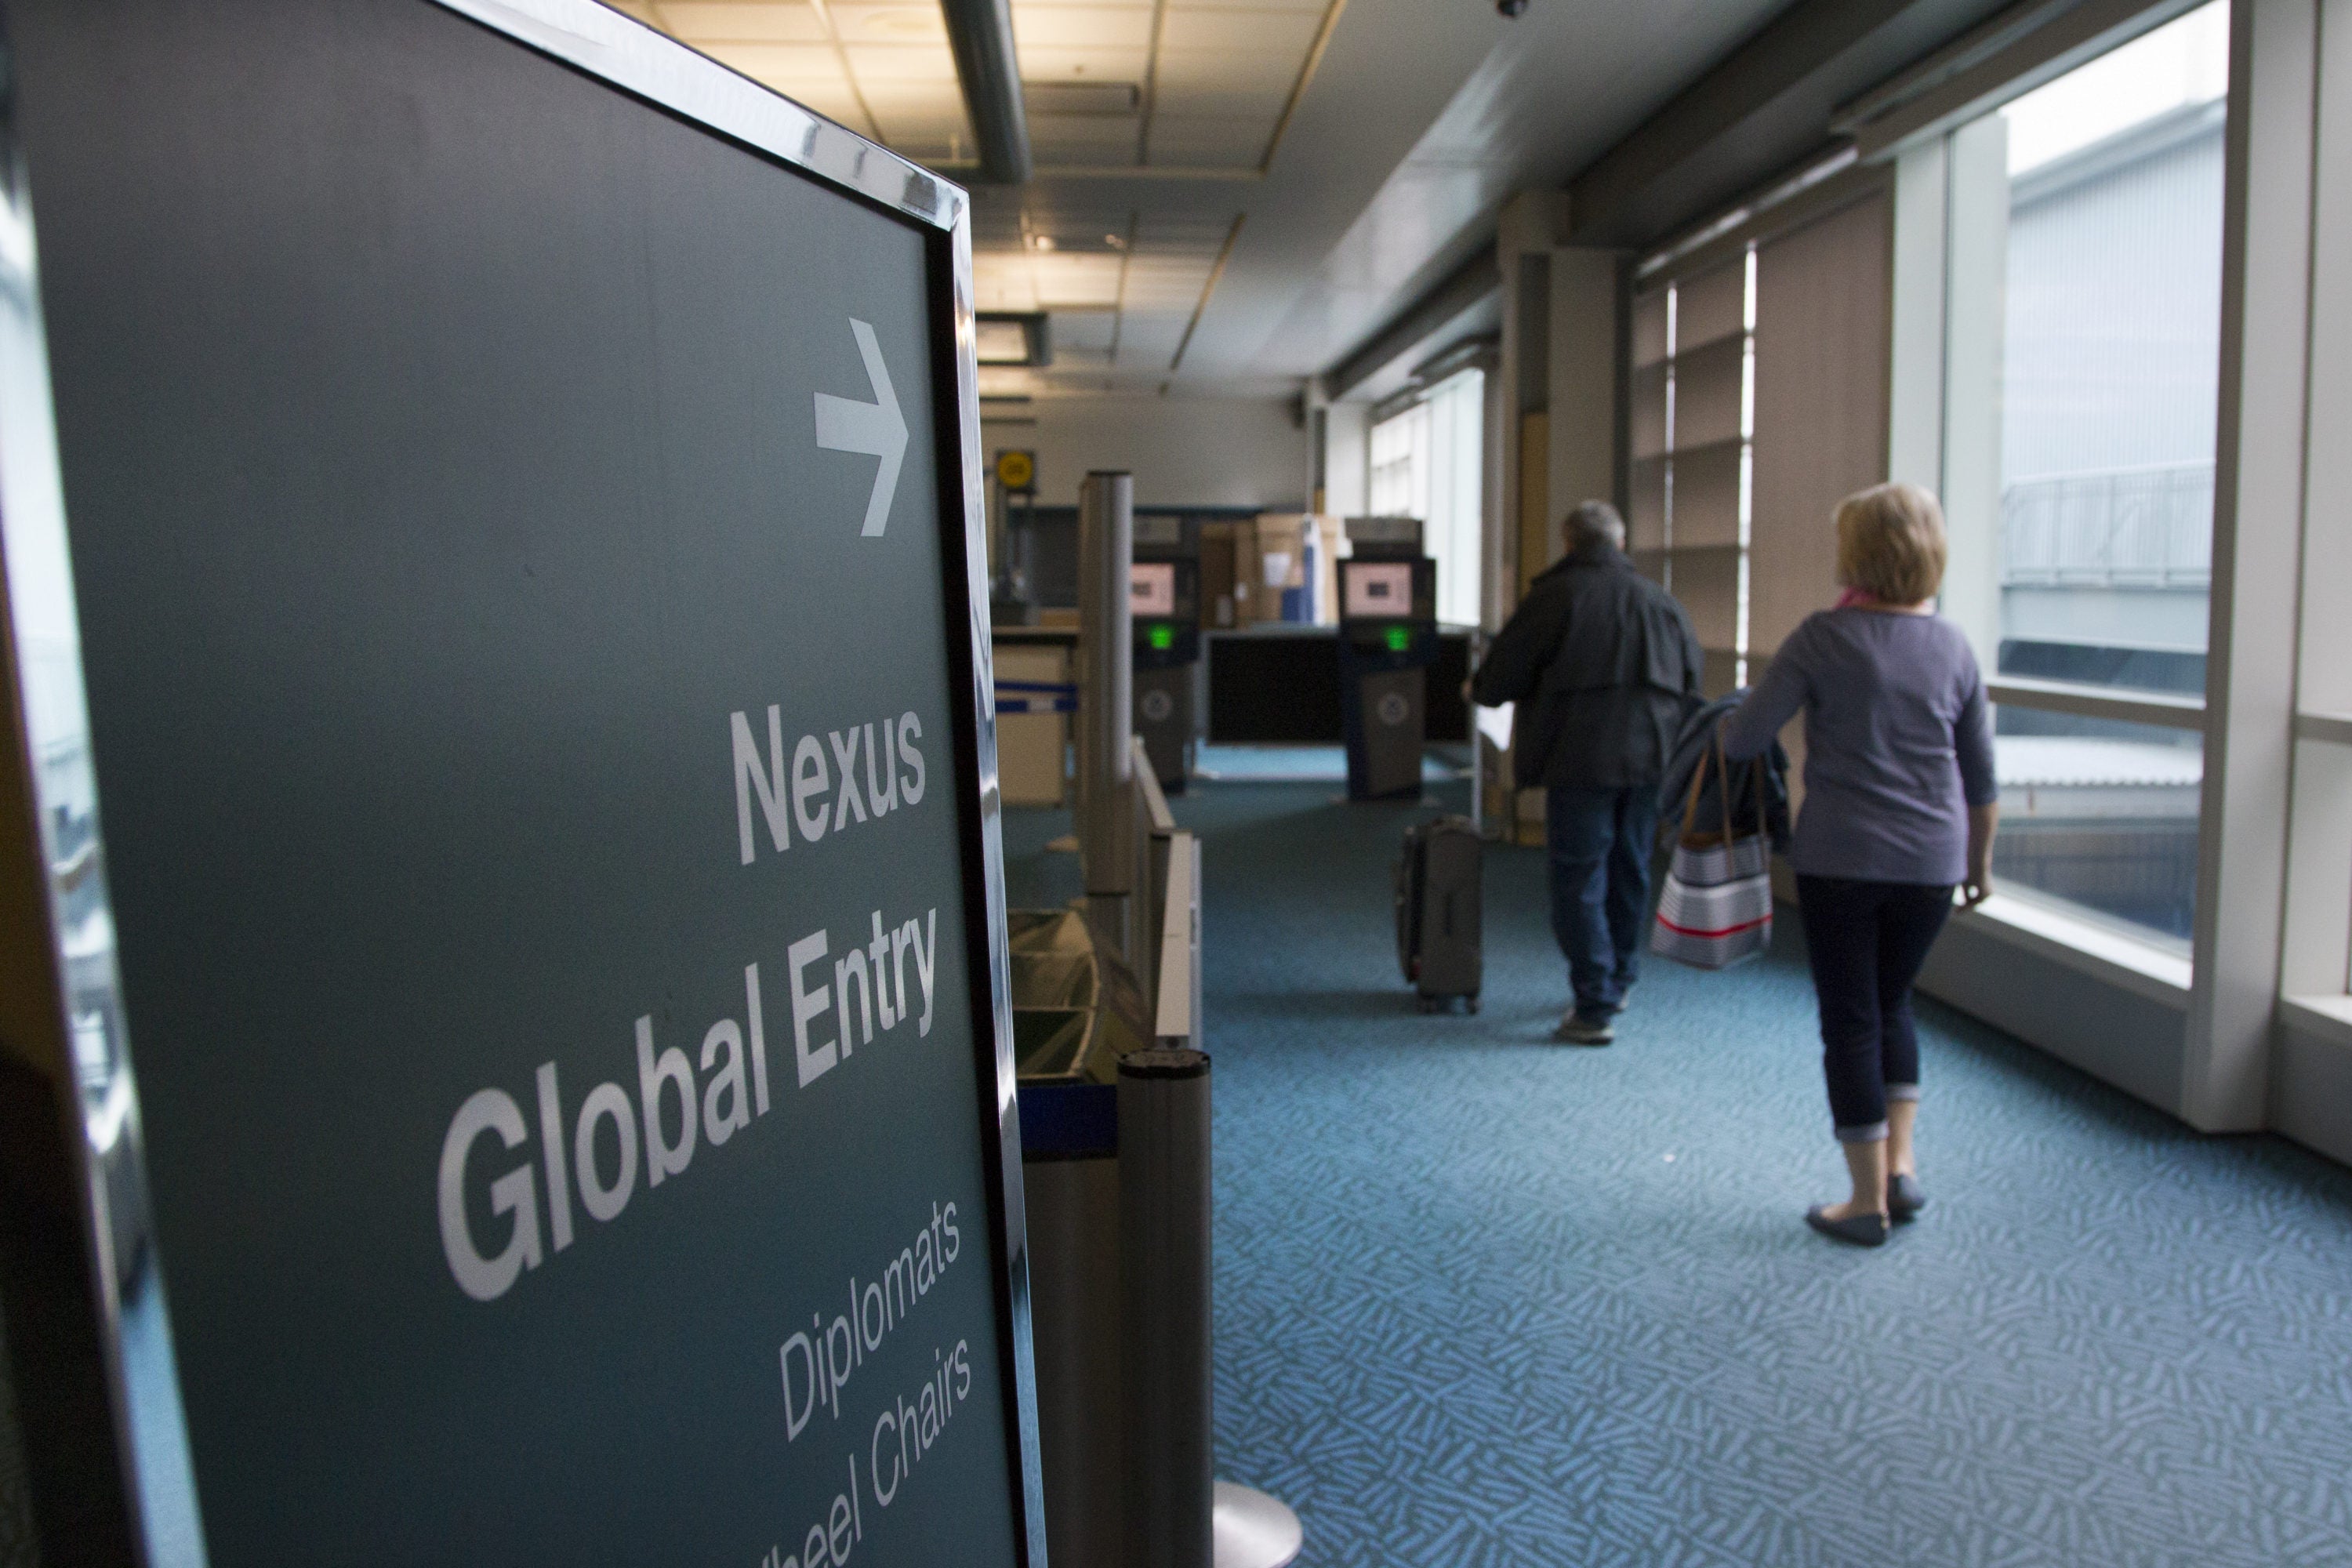 Nexus Global Entry sign at airport